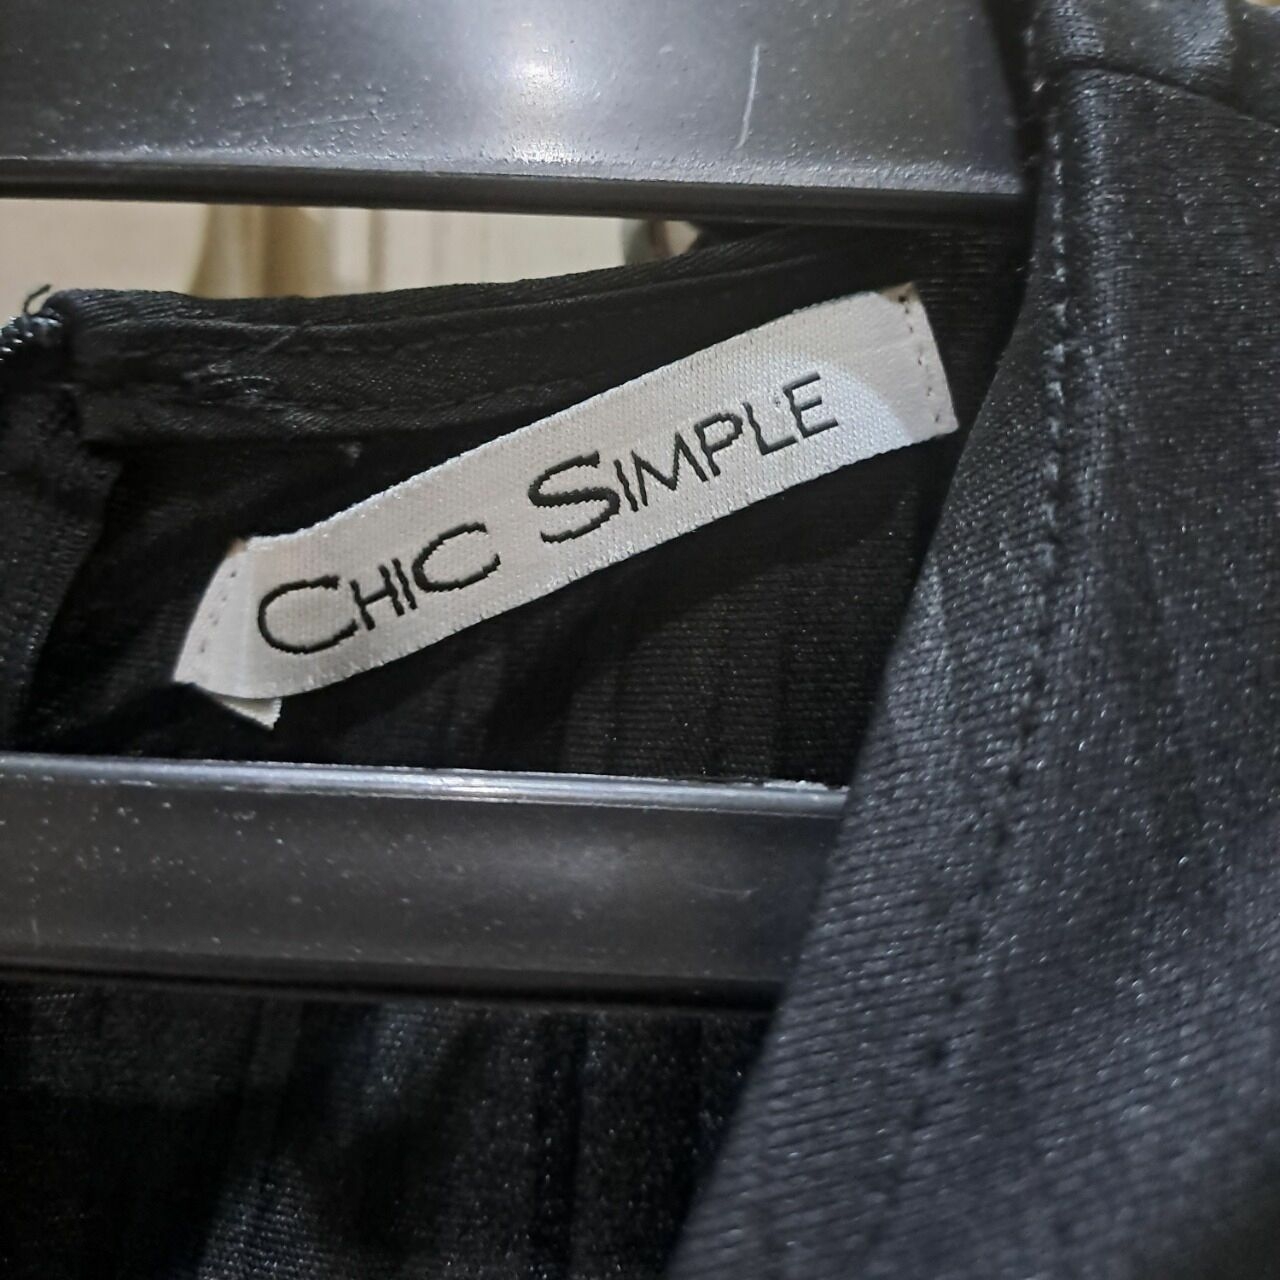 Chic Simple Black Plaid Jumpsuit